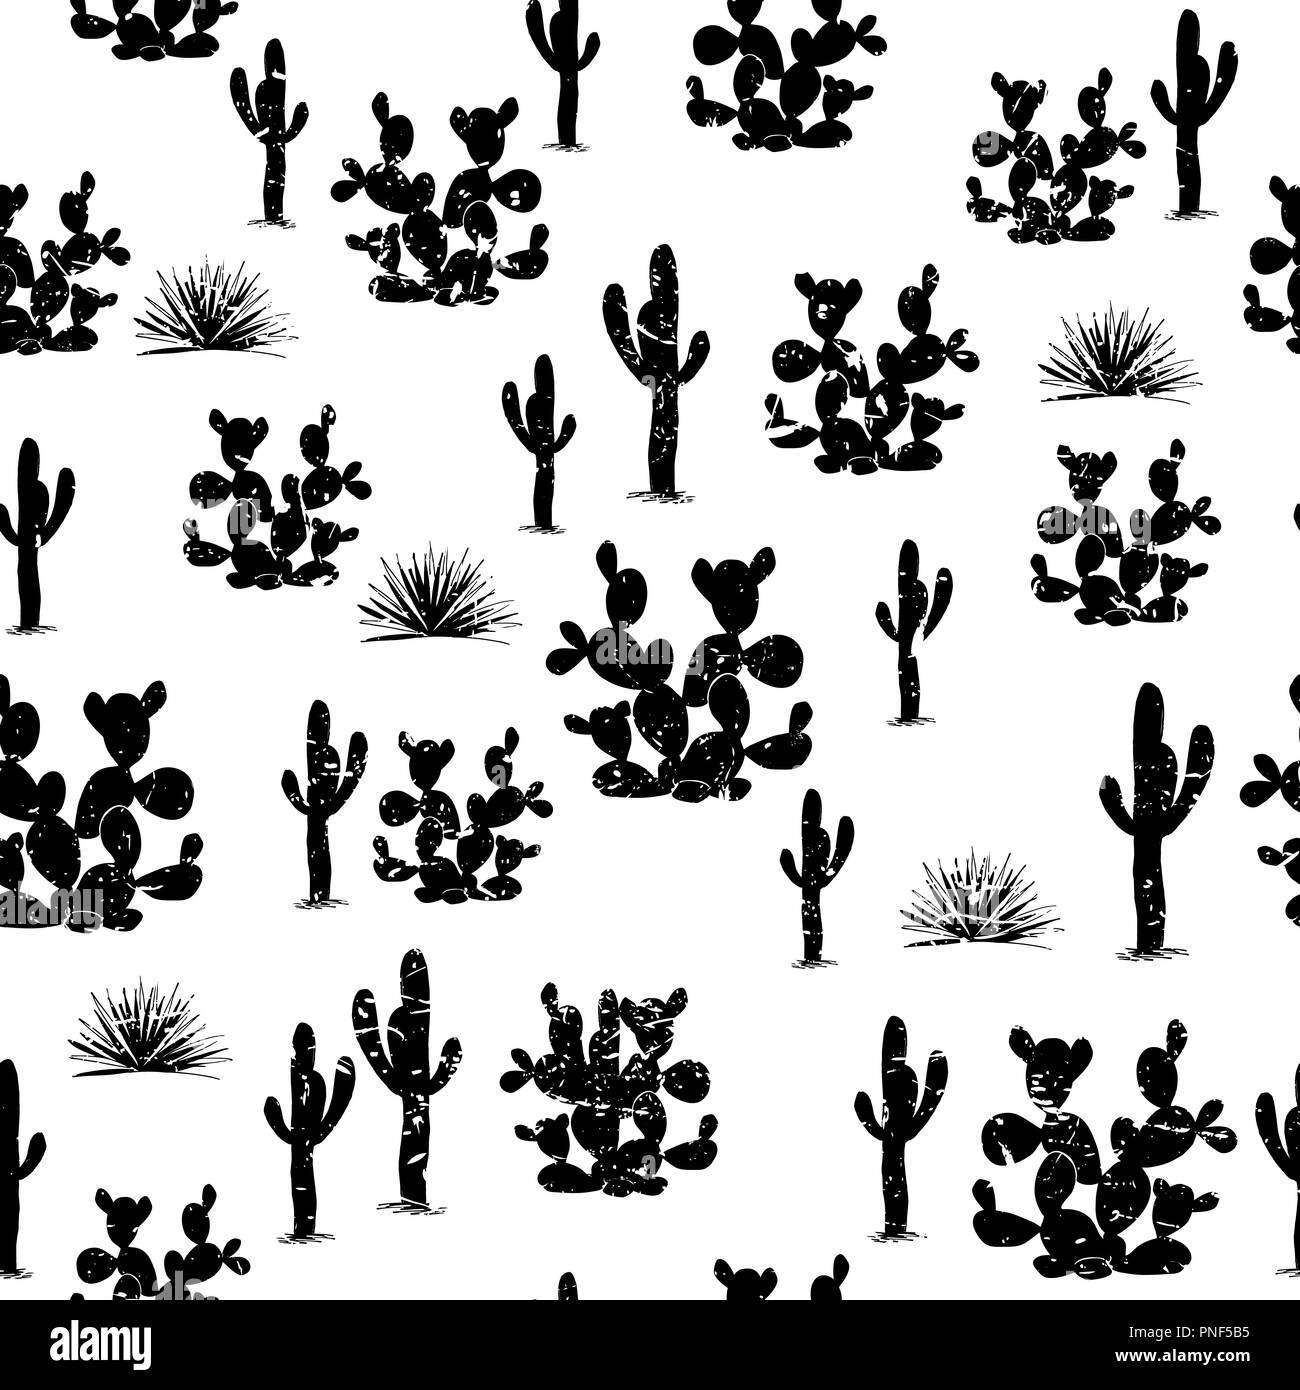 Desert cactus wallpaper Black and White Stock Photos & Images - Alamy